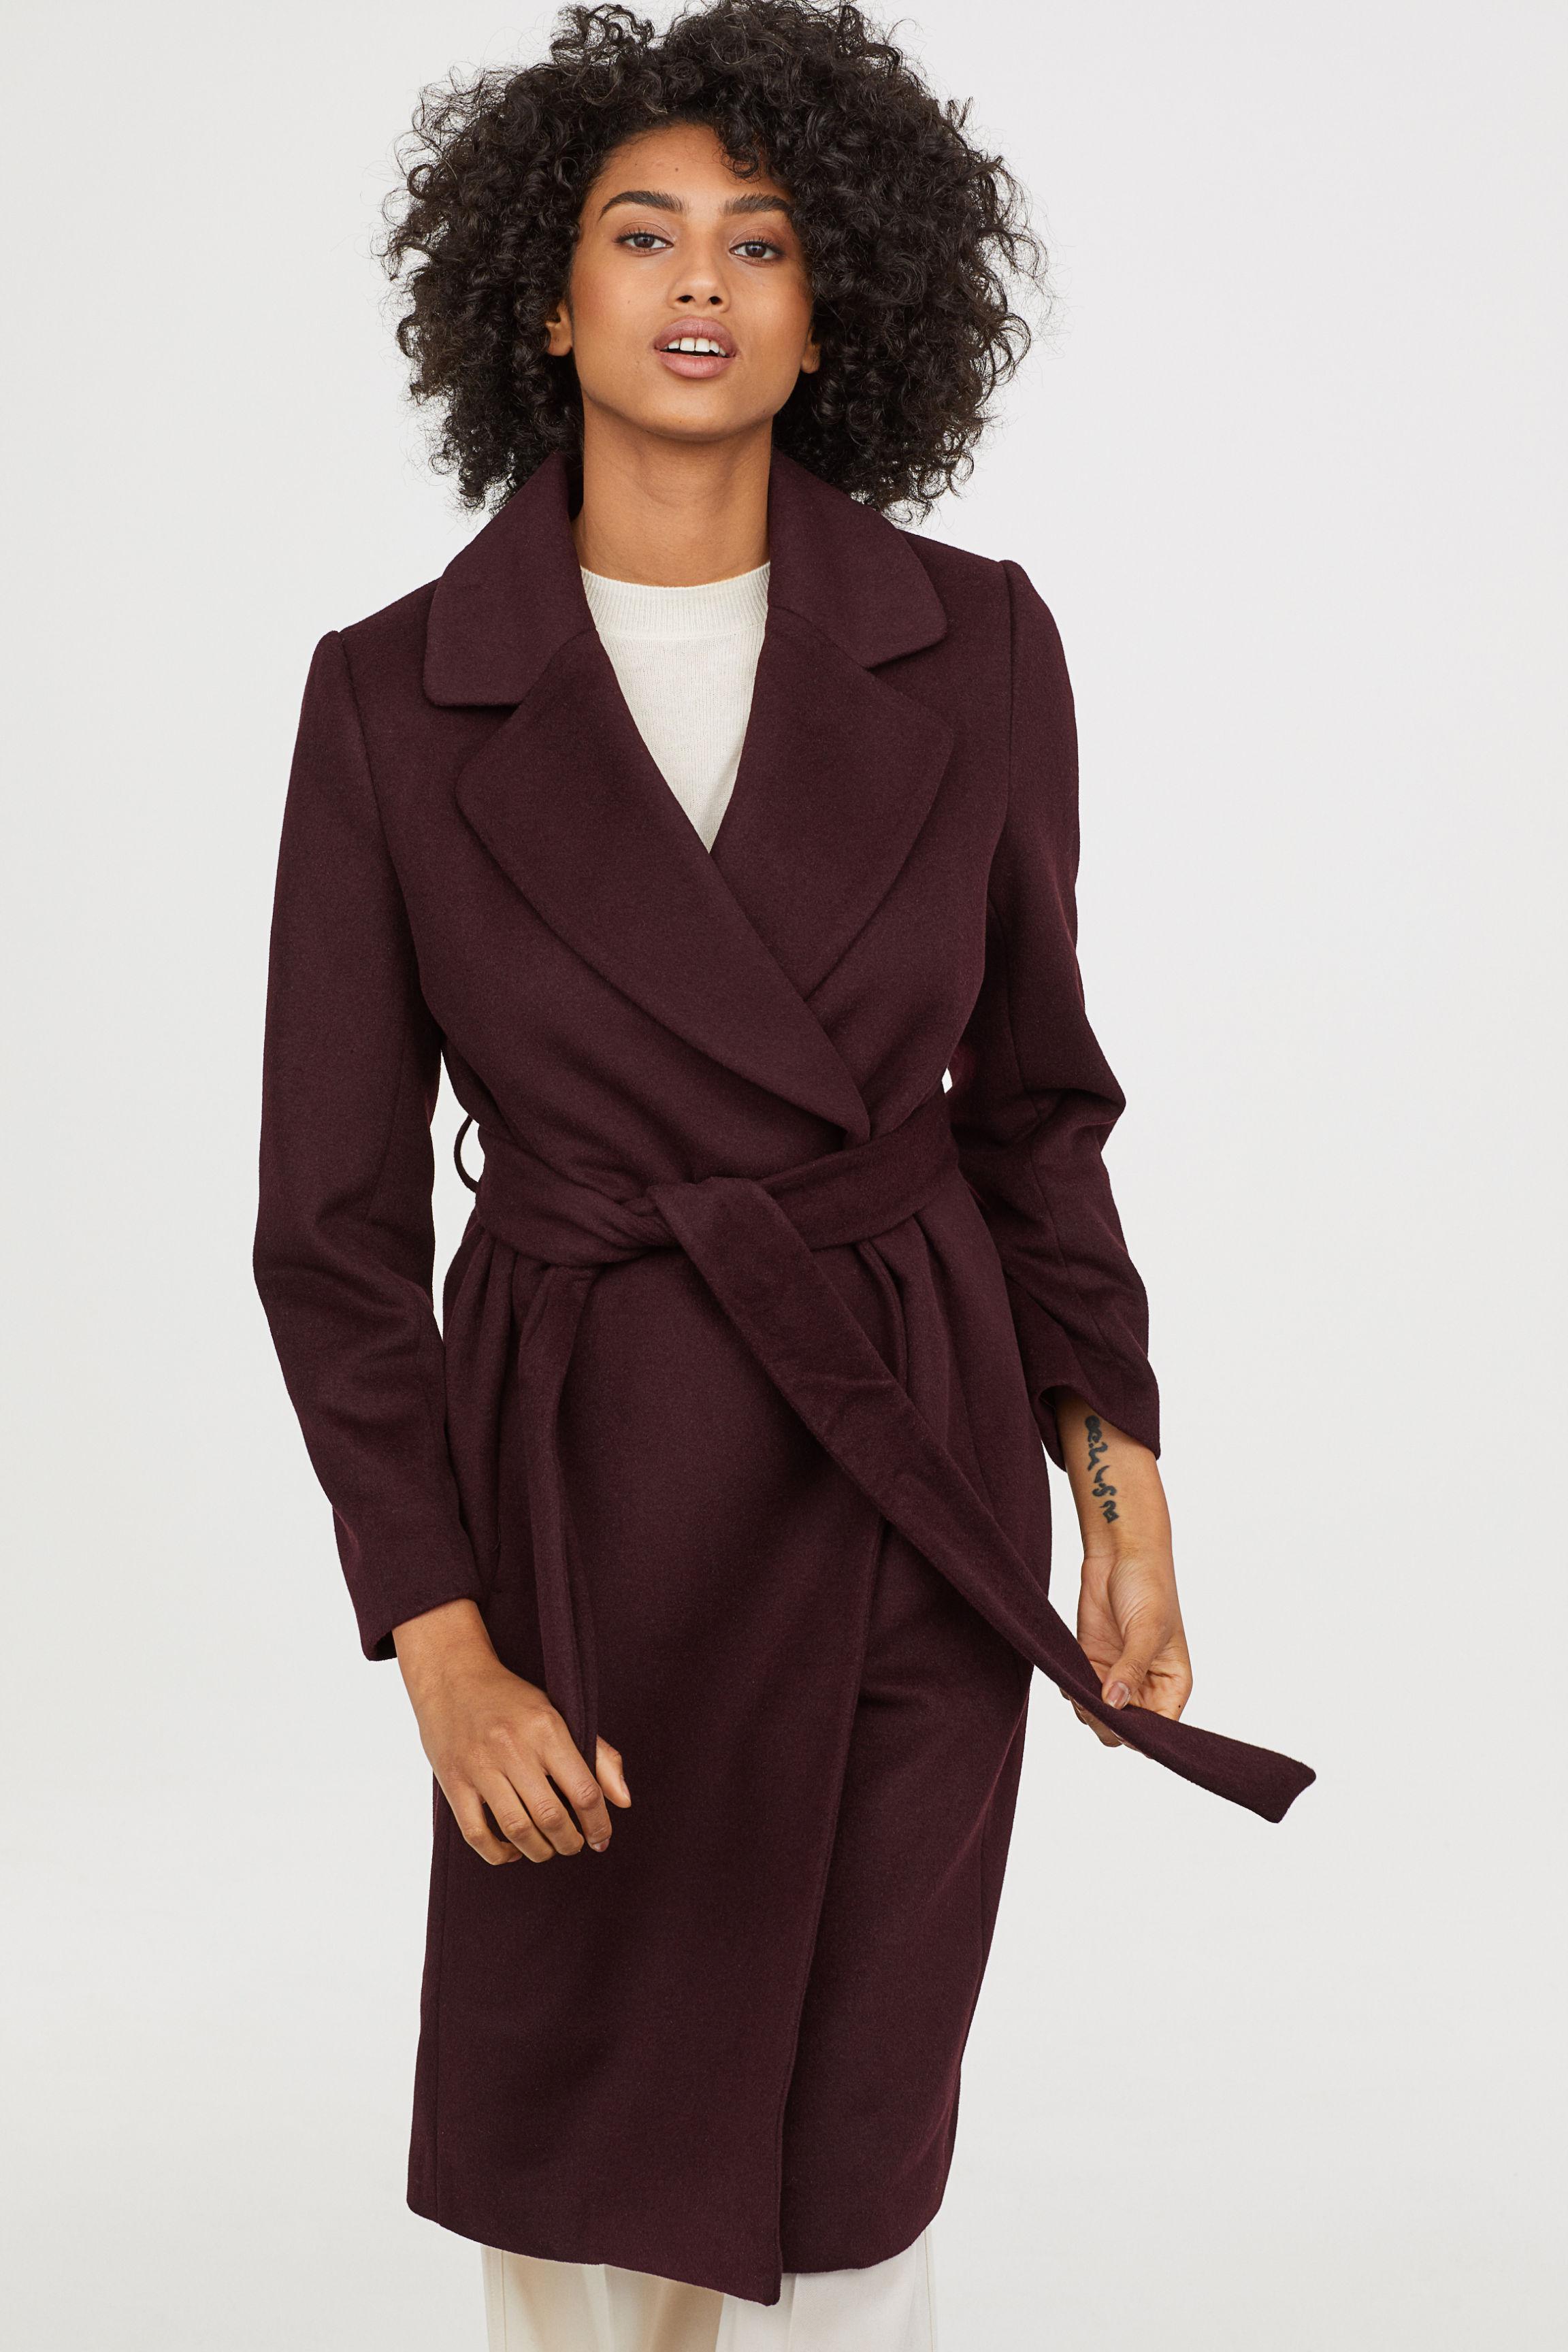 H&M Wool-blend Coat in Burgundy (Purple) - Lyst